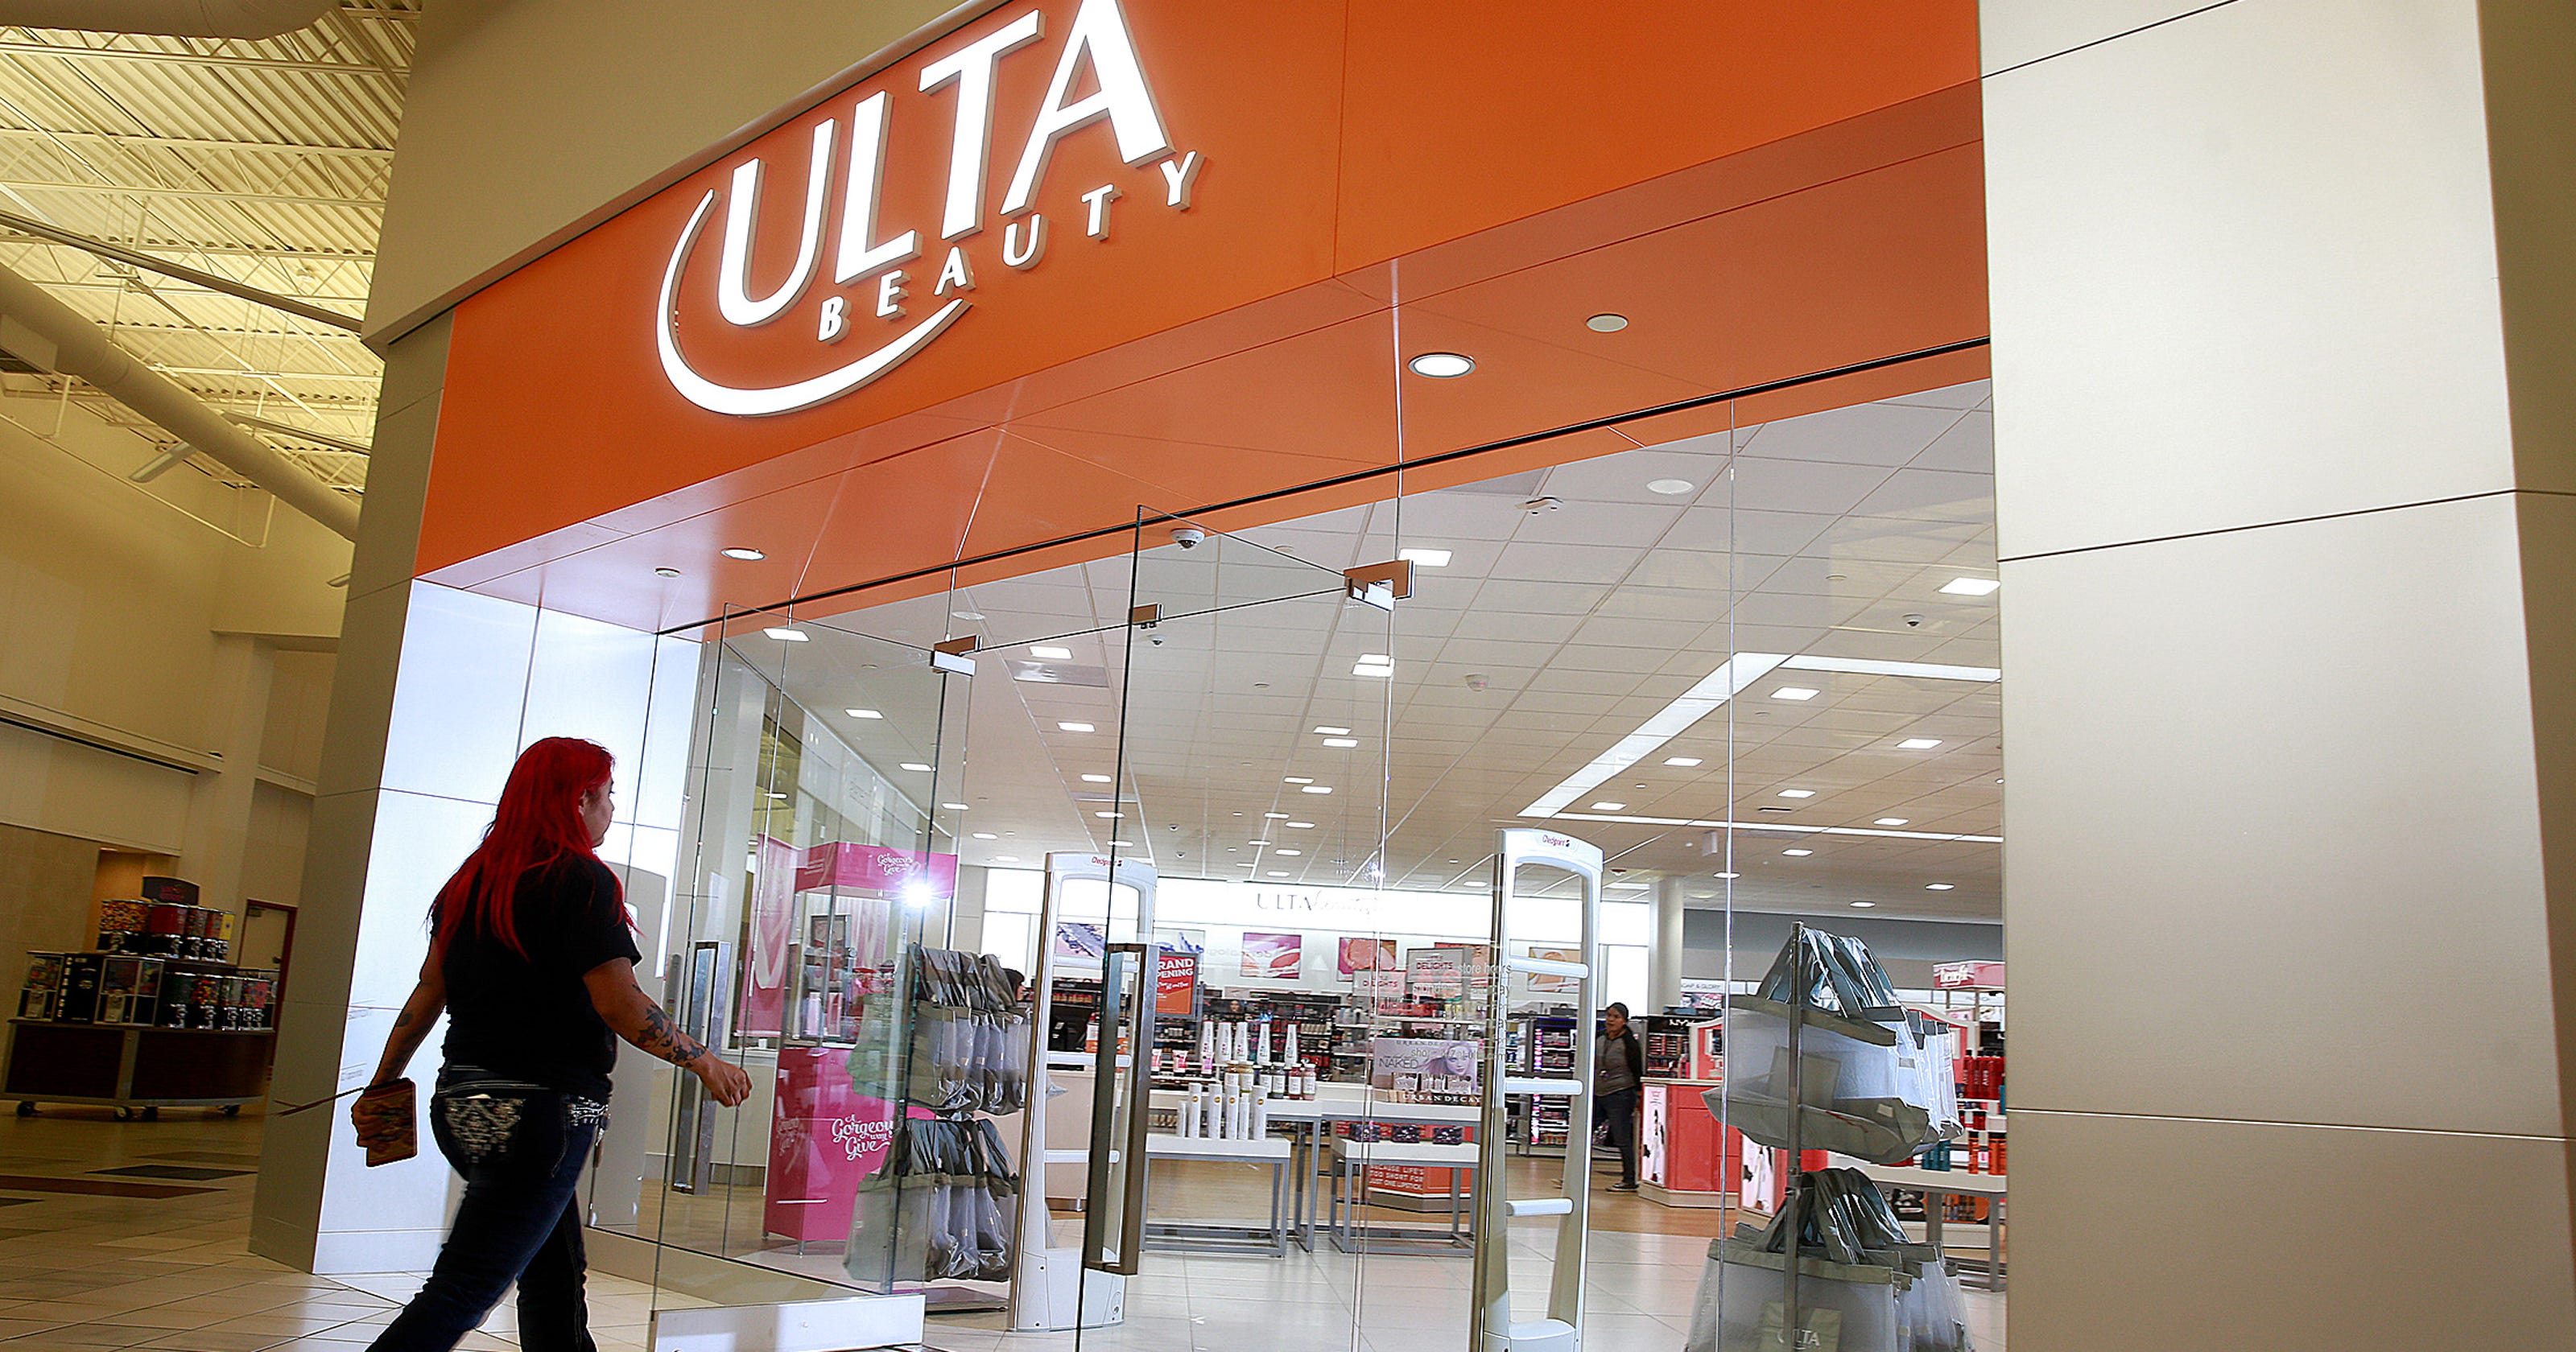 Farmington Ulta Beauty store hosts grand opening